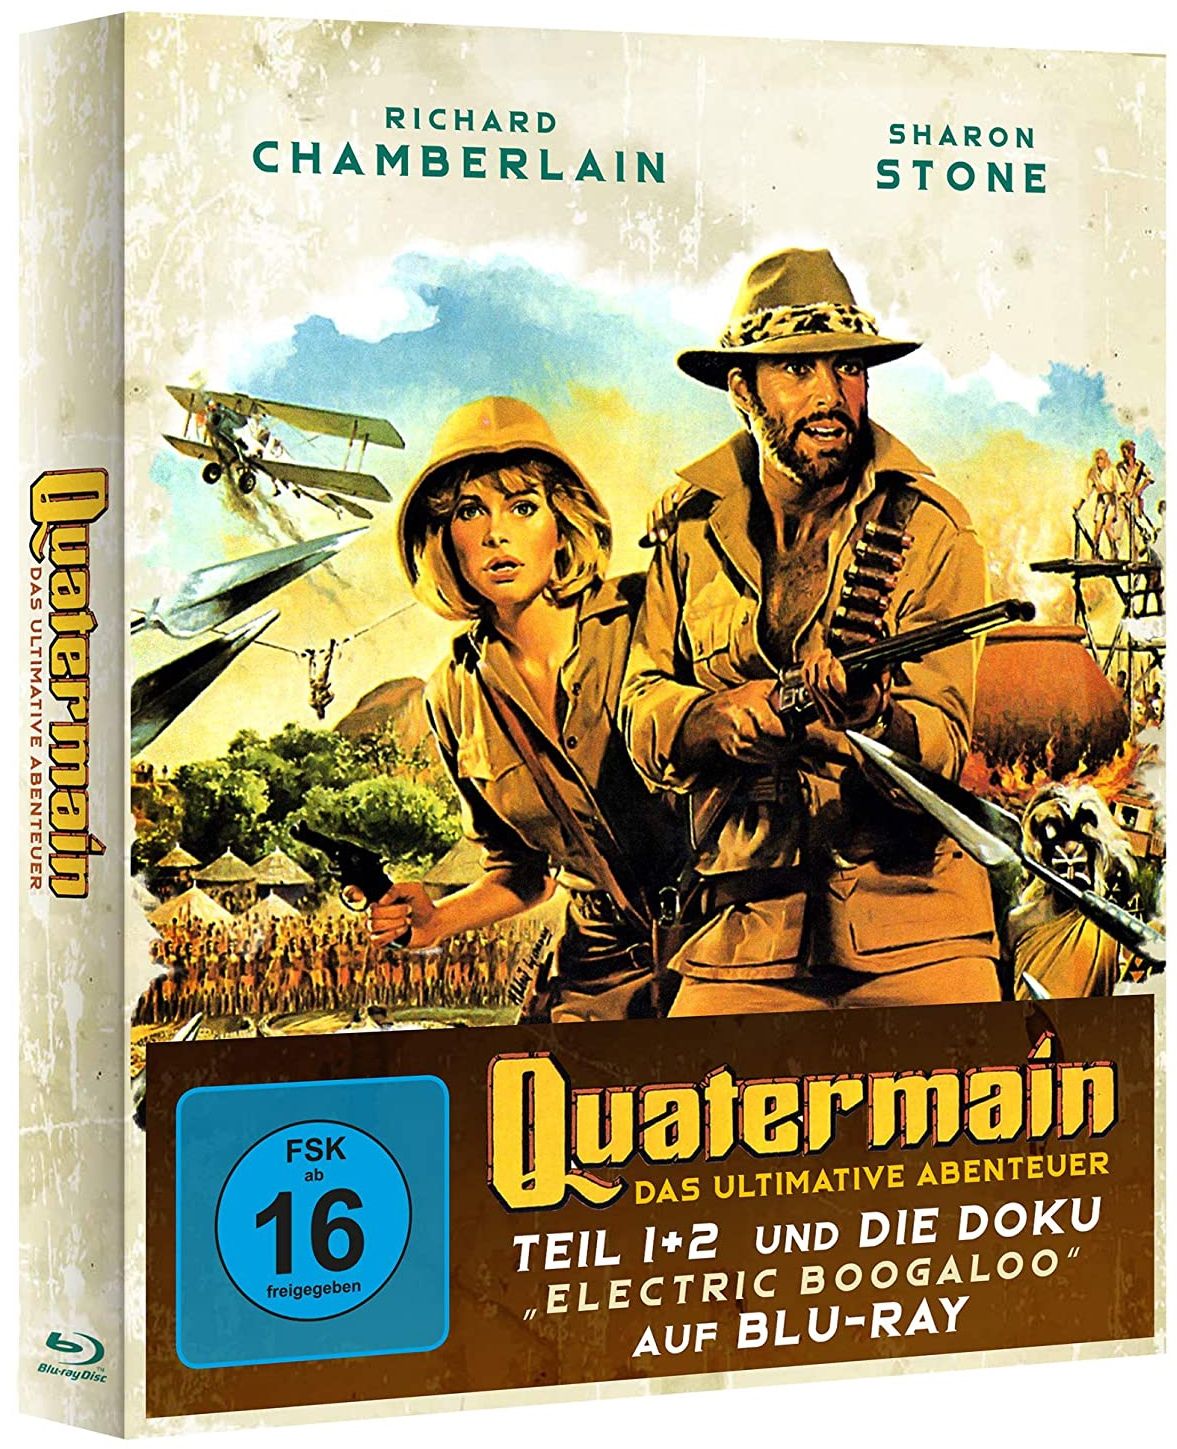 Quatermain 1+2 / Electric Boogaloo (Quatermain - Das ultimative Abenteuer) (DigiPak) (3 Discs) (BLURAY)